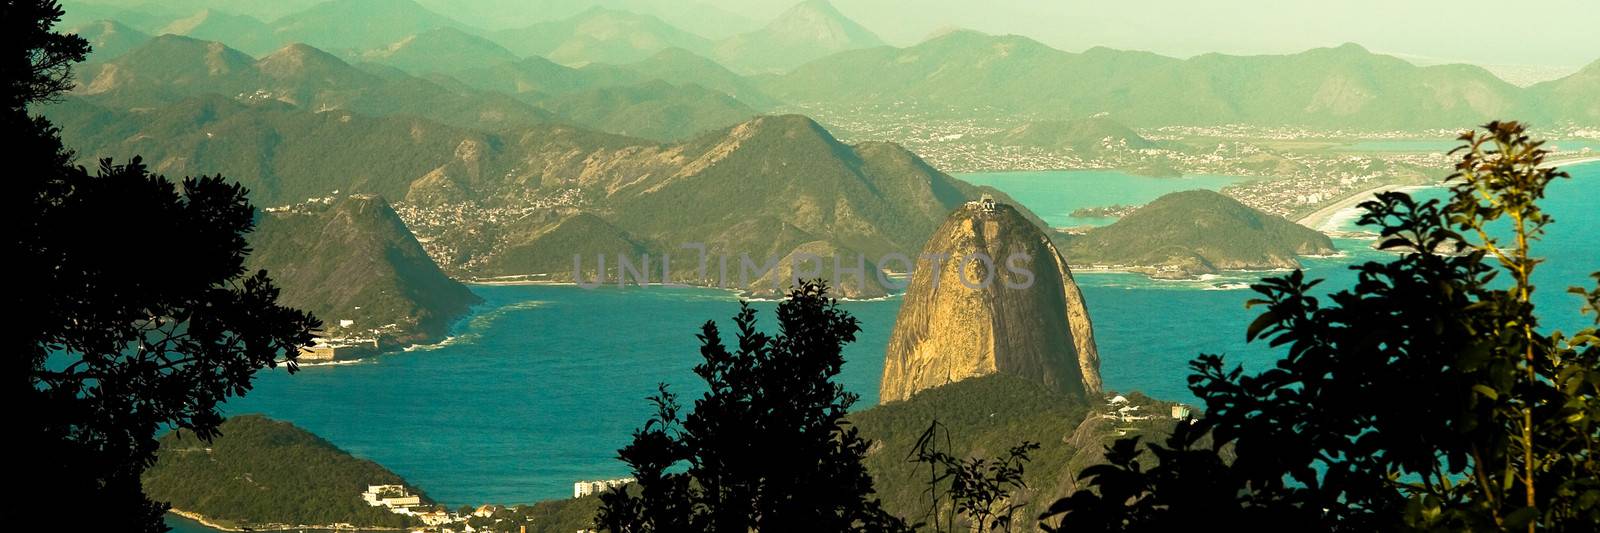 High angle view of Sugarloaf Mountain in Rio de Janeiro, Brazil